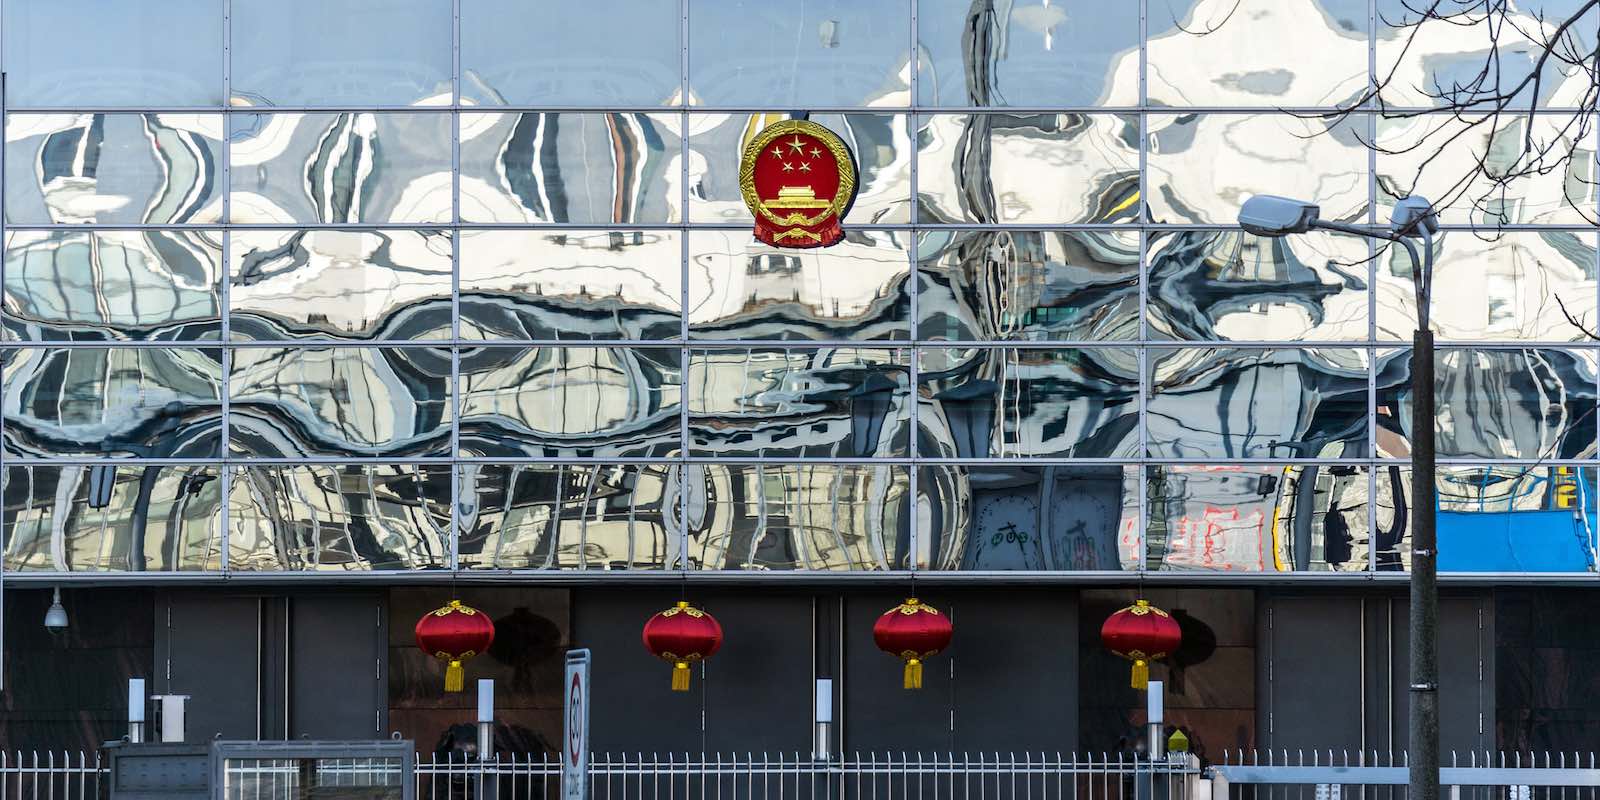 The embassy of the People’s Republic of China, Berlin (bilderkombinat berlin/Flickr)